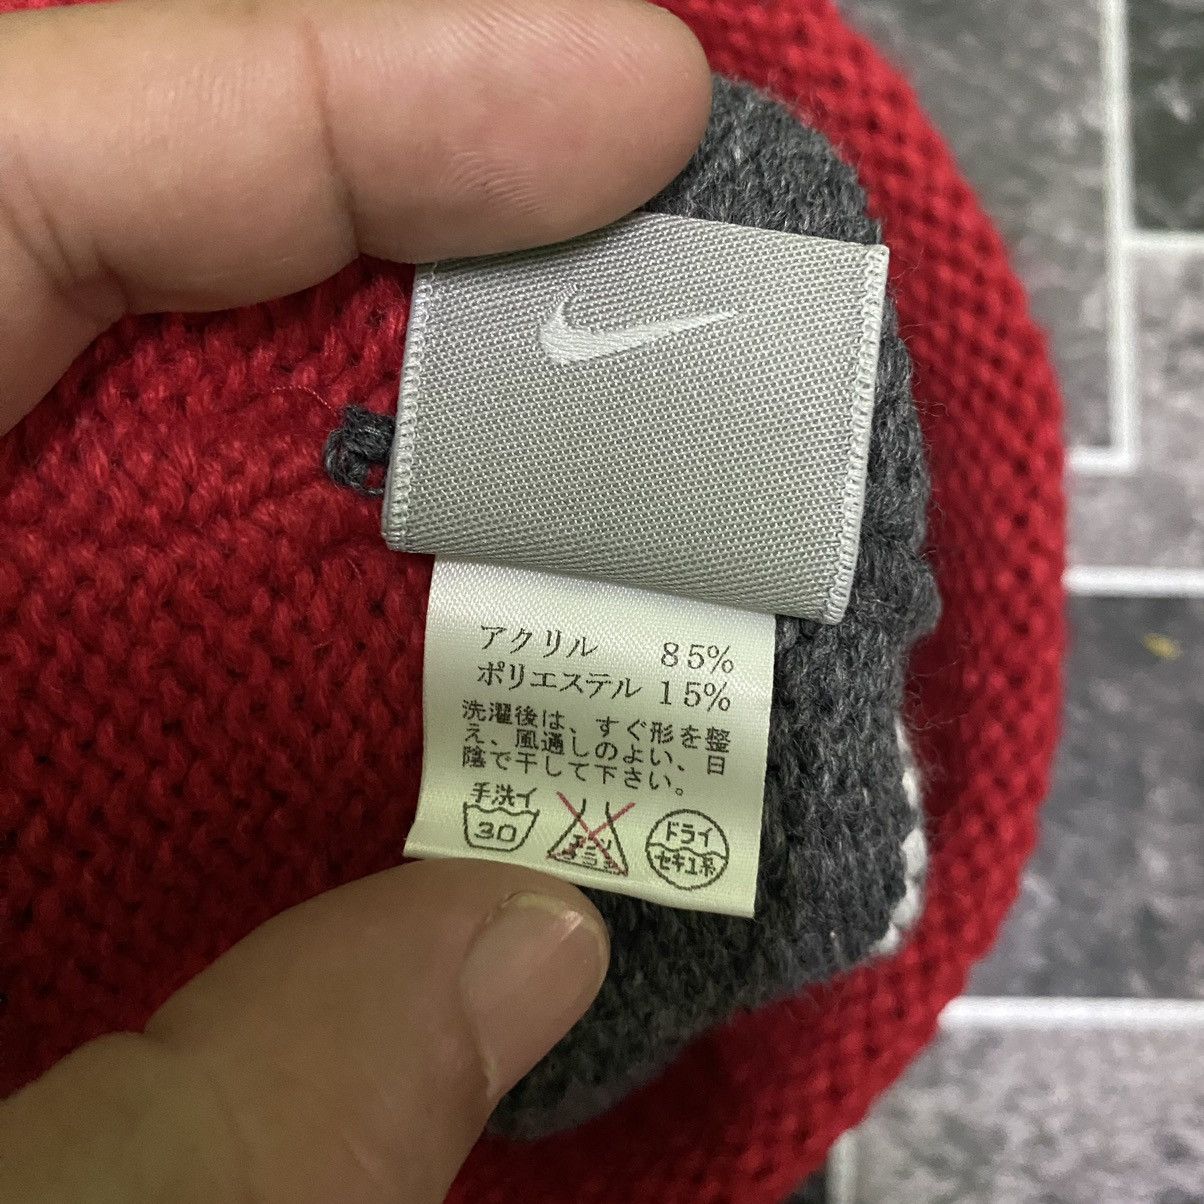 Vintage Nike Beanie Hat Red/white/grey Colour - 8